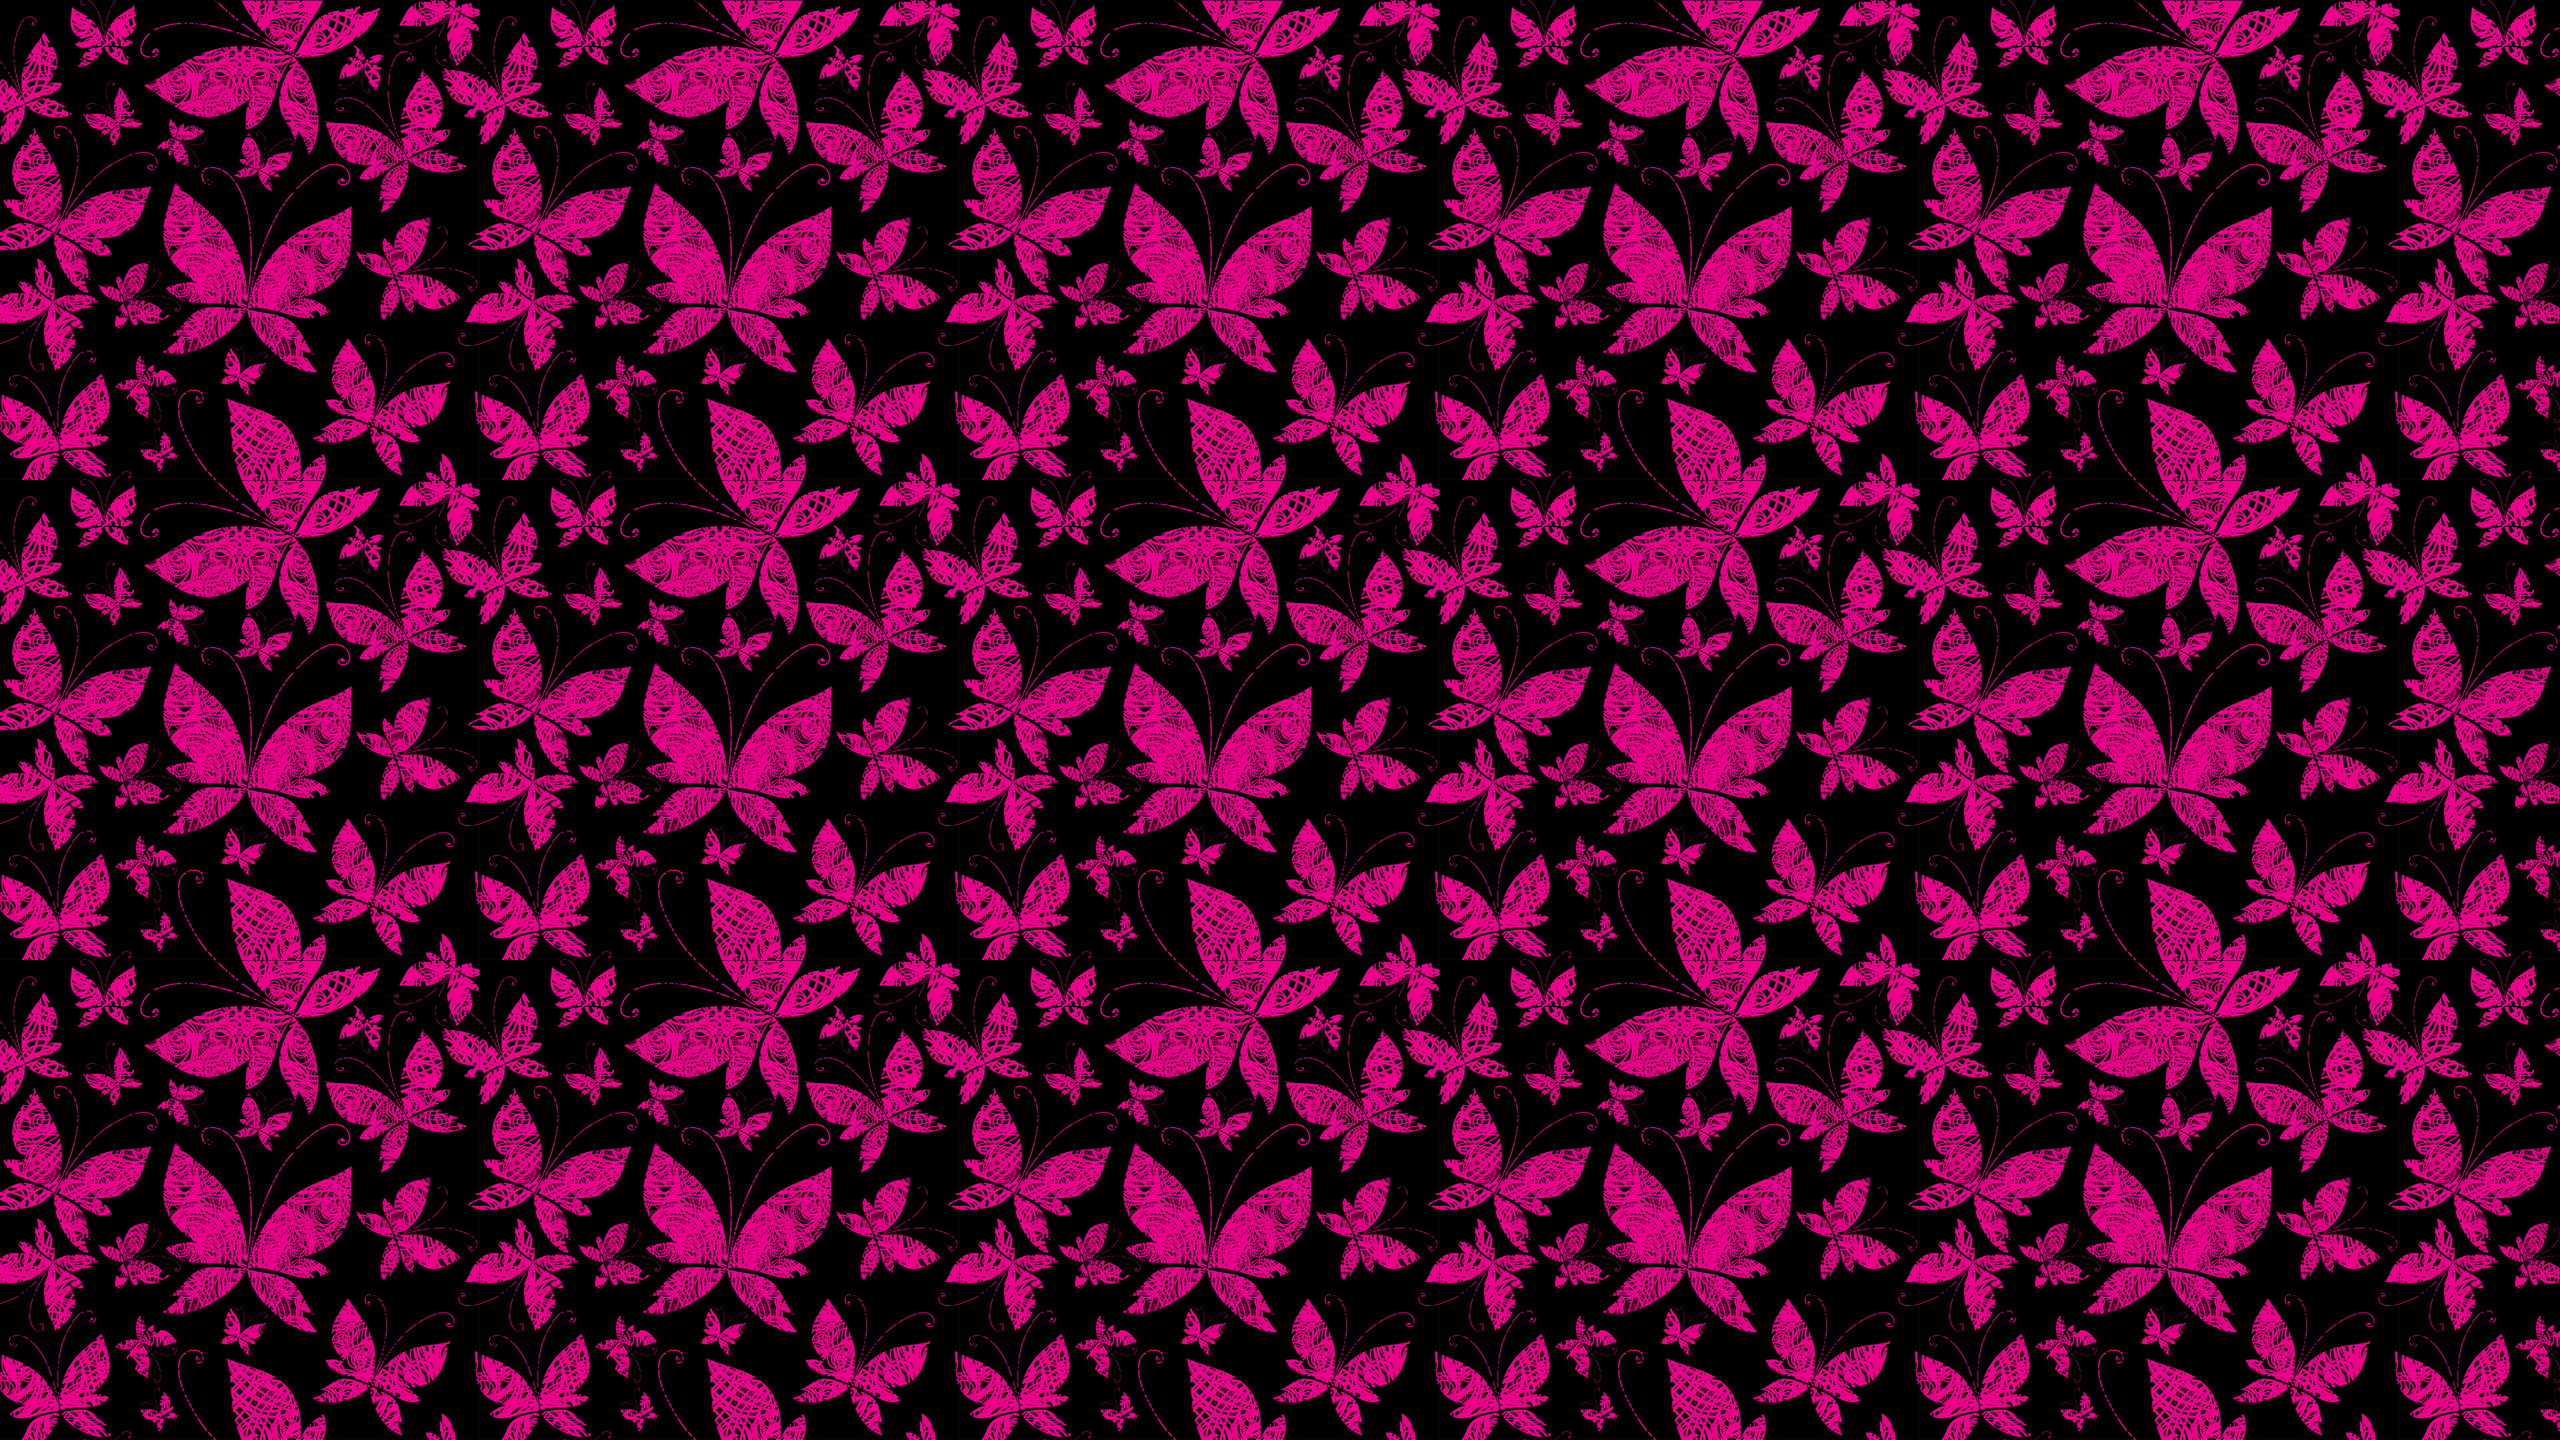 Installing This Abstract Butterflies Desktop Wallpaper Is Easy Just